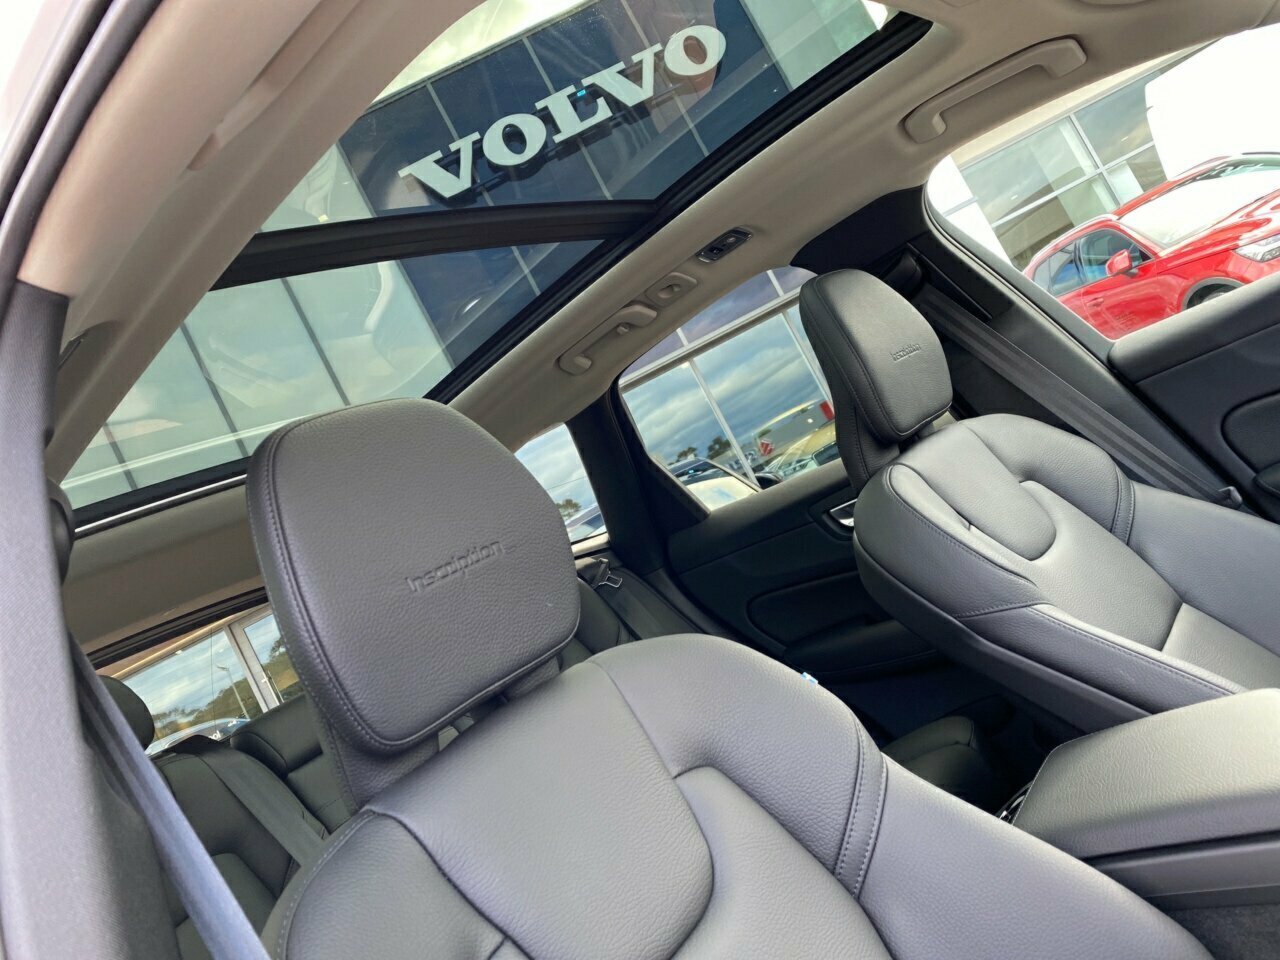 2019 MY20 Volvo XC60 UZ D4 Inscription SUV Image 9